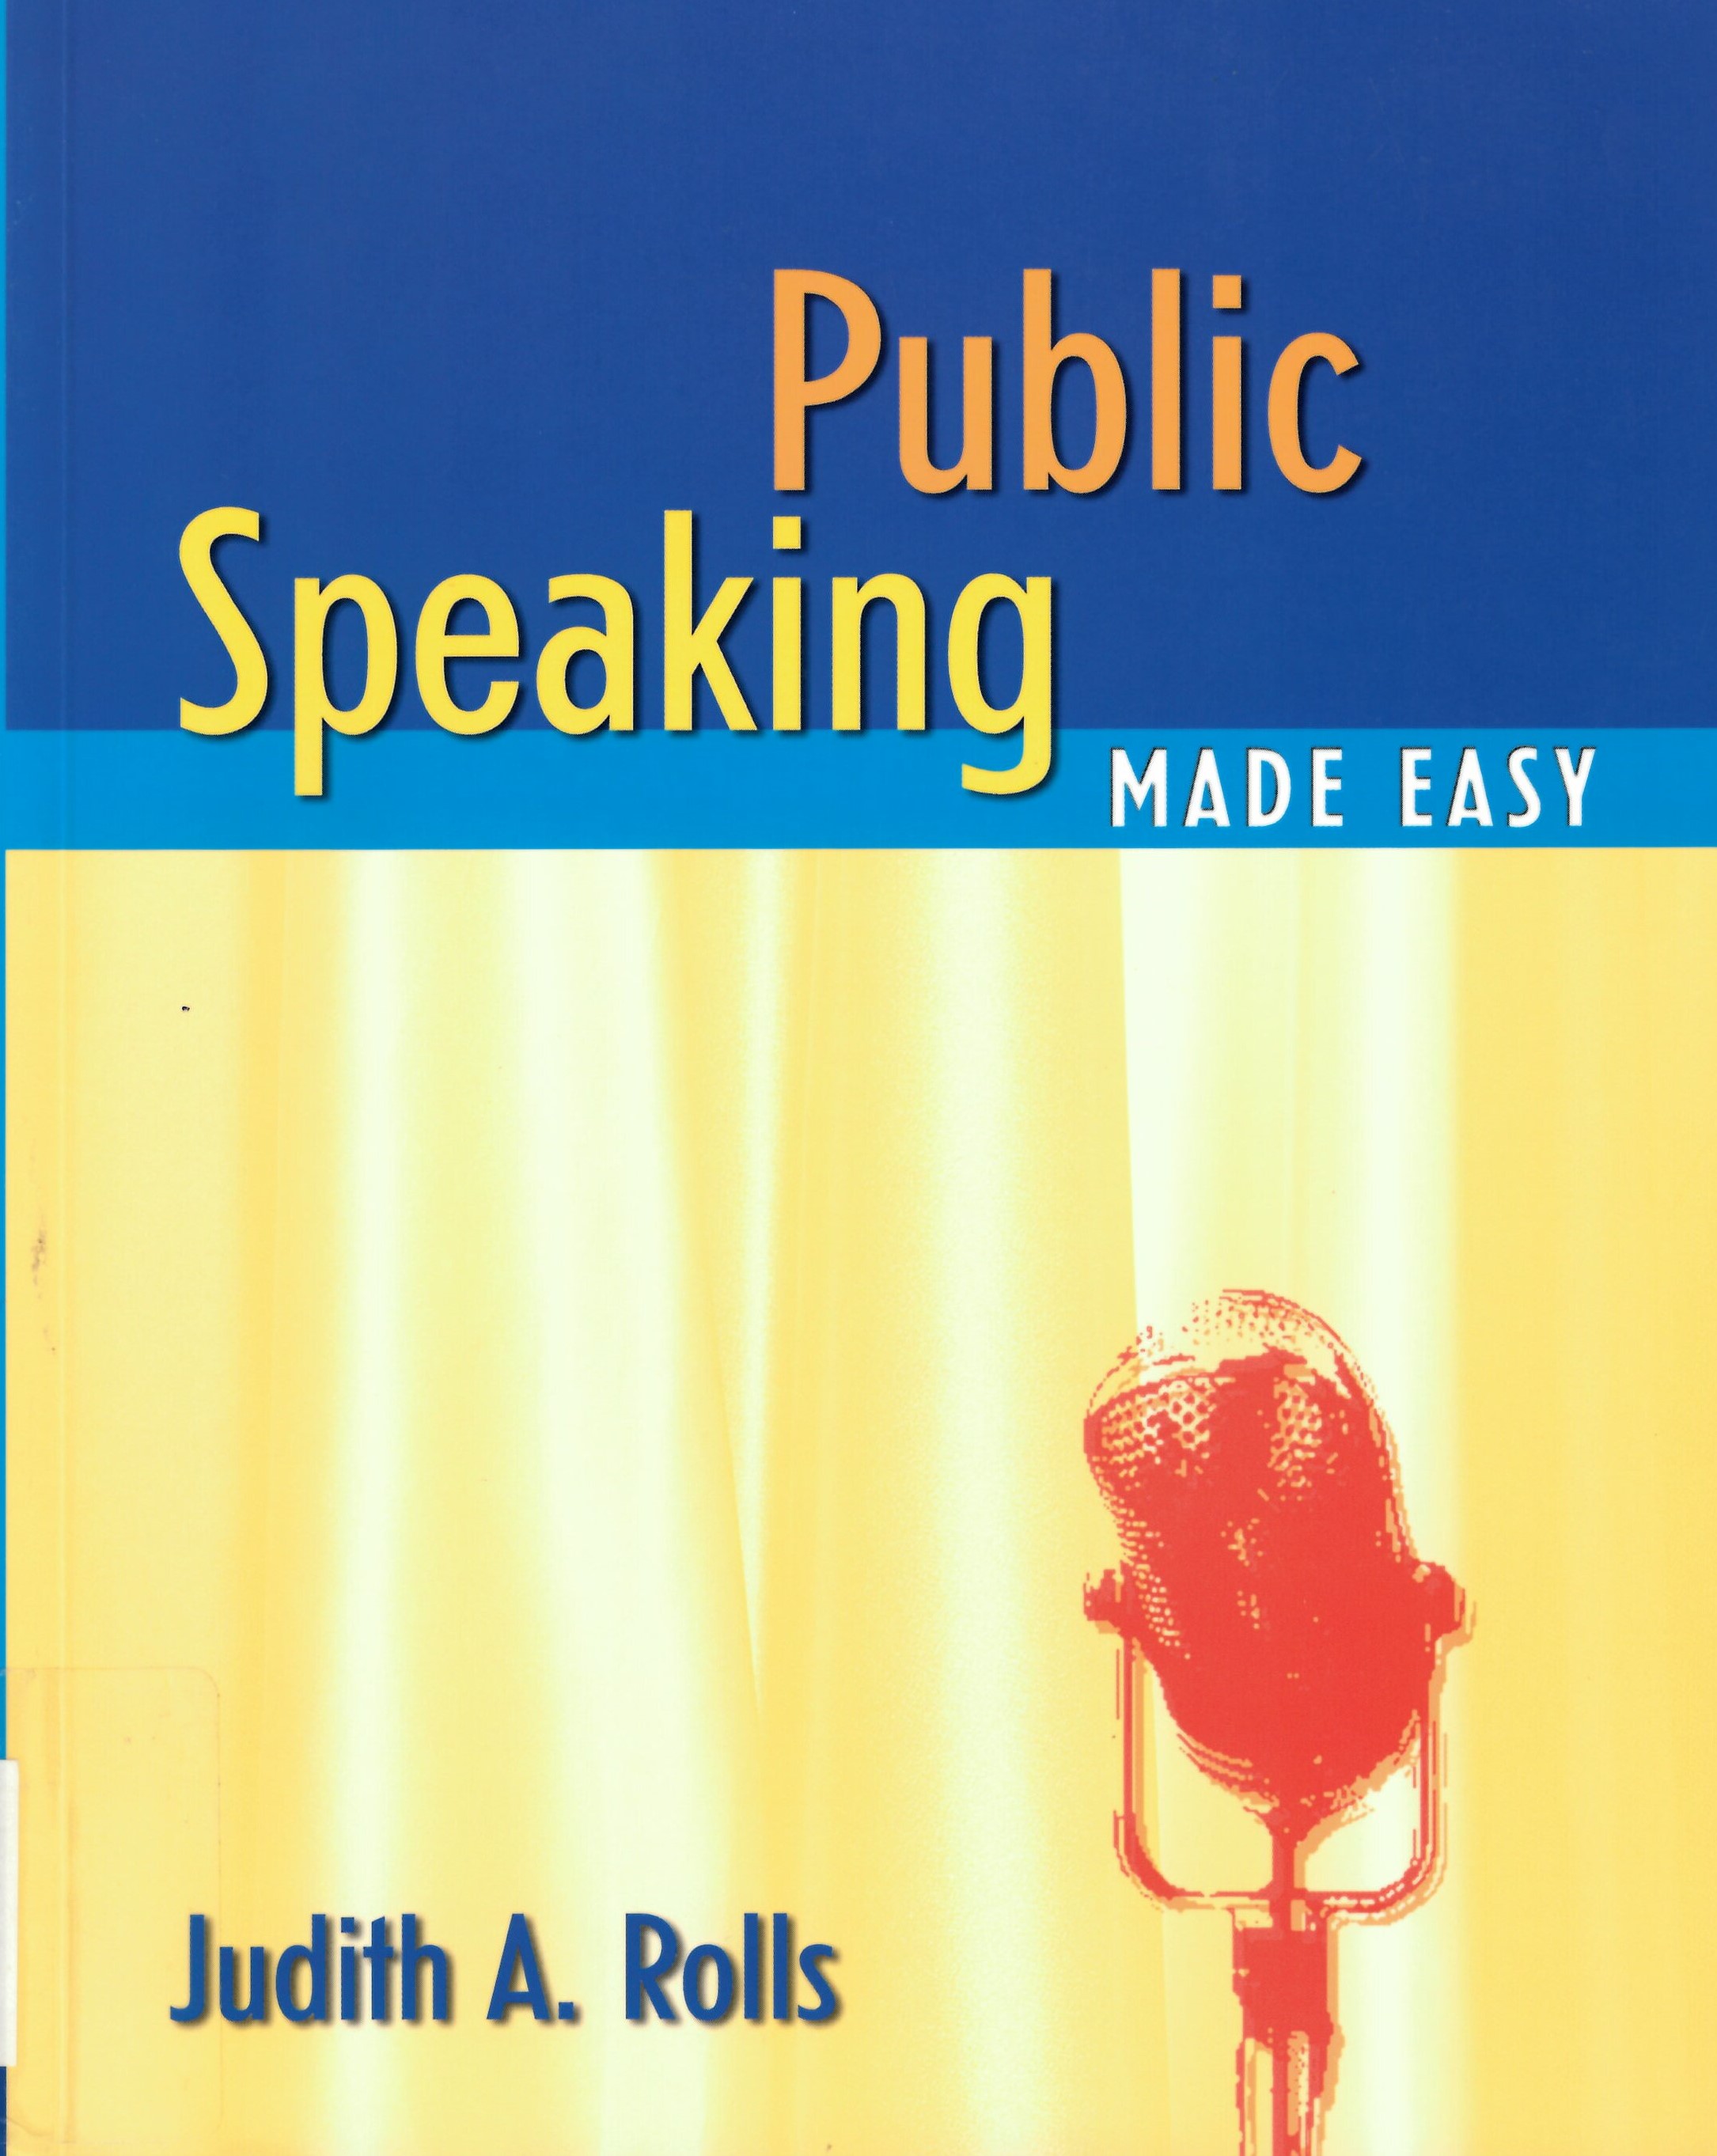 Public speaking made easy